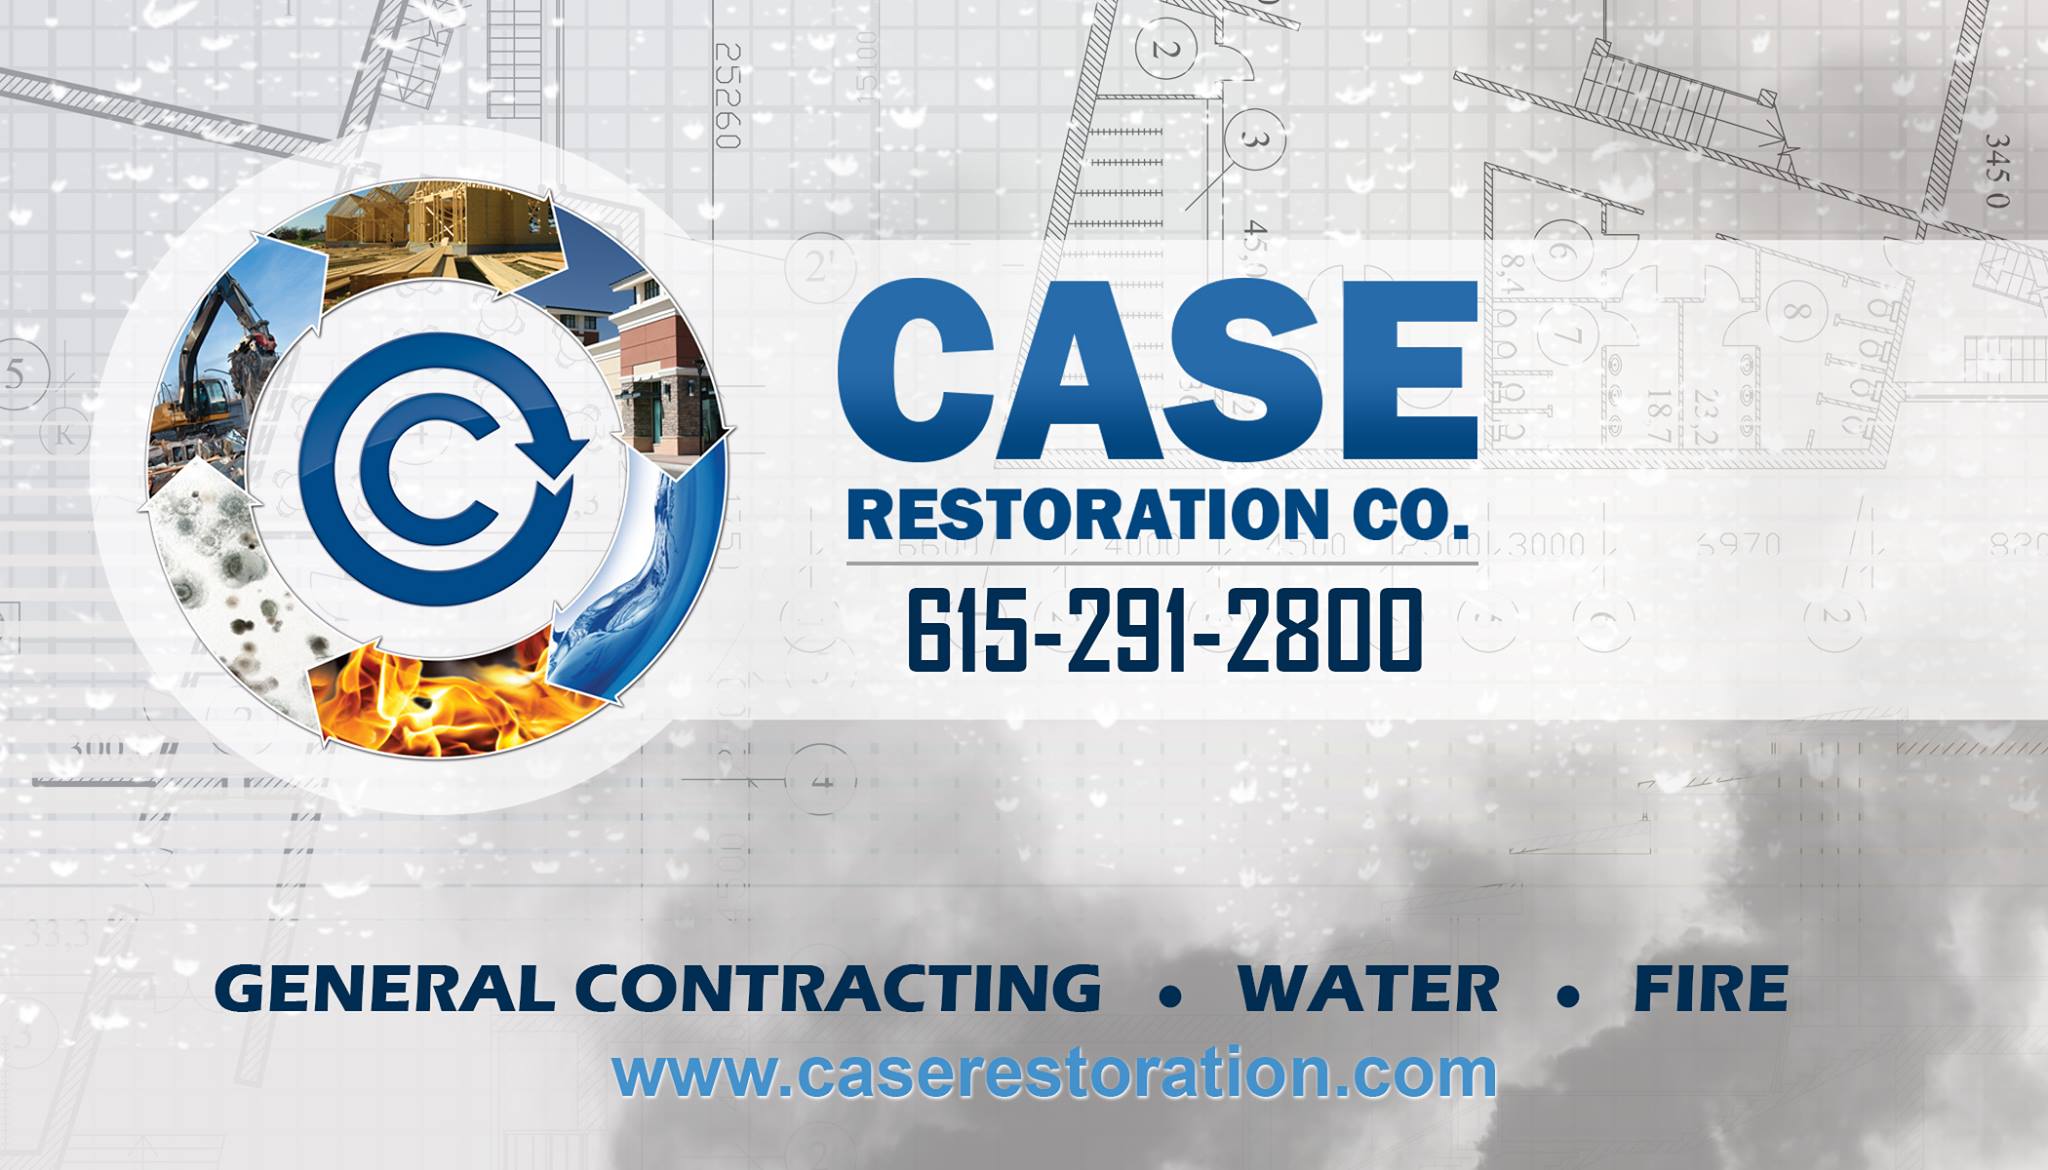 Case Restoration Co